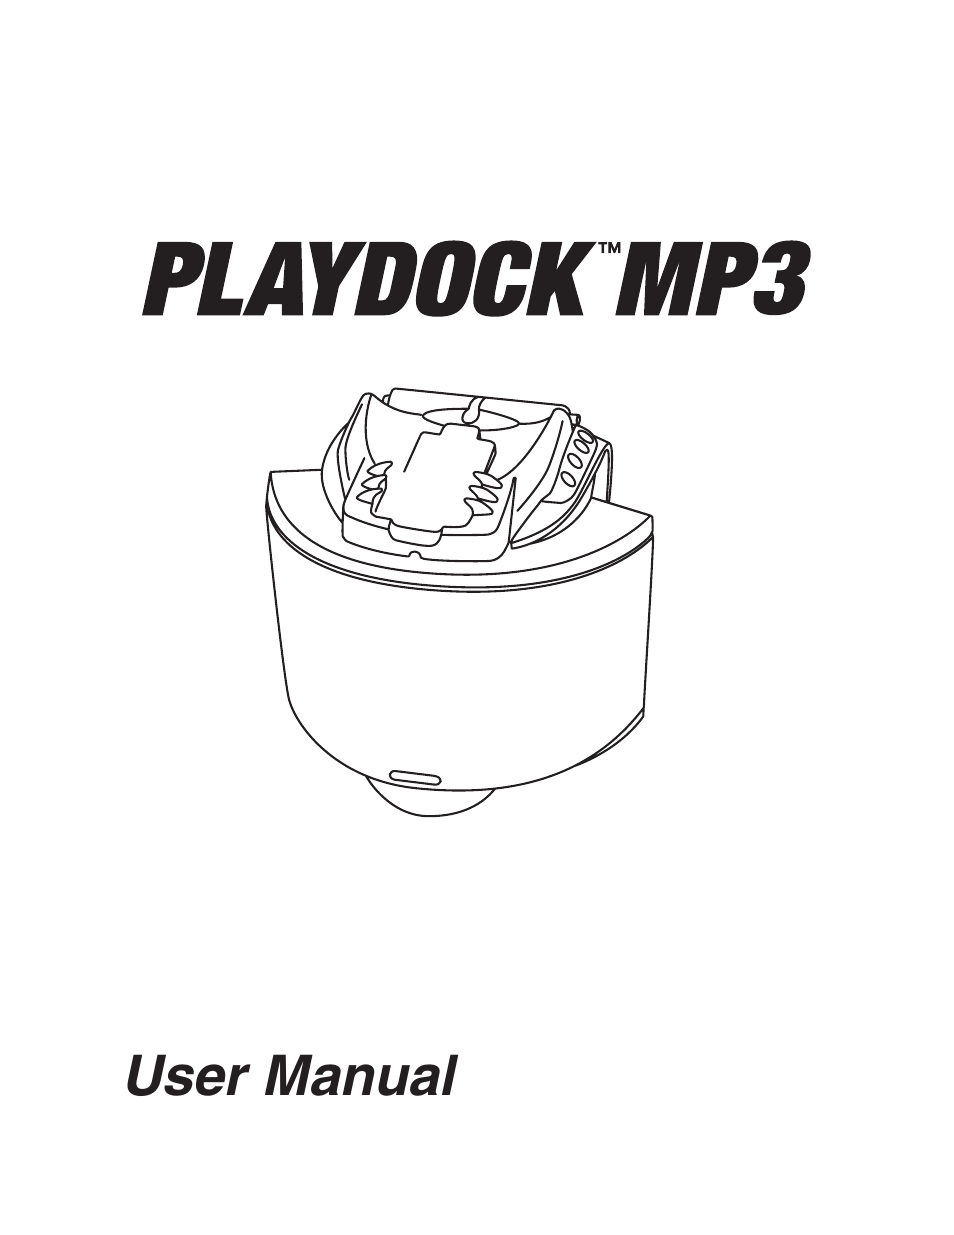 PlayDock MP3